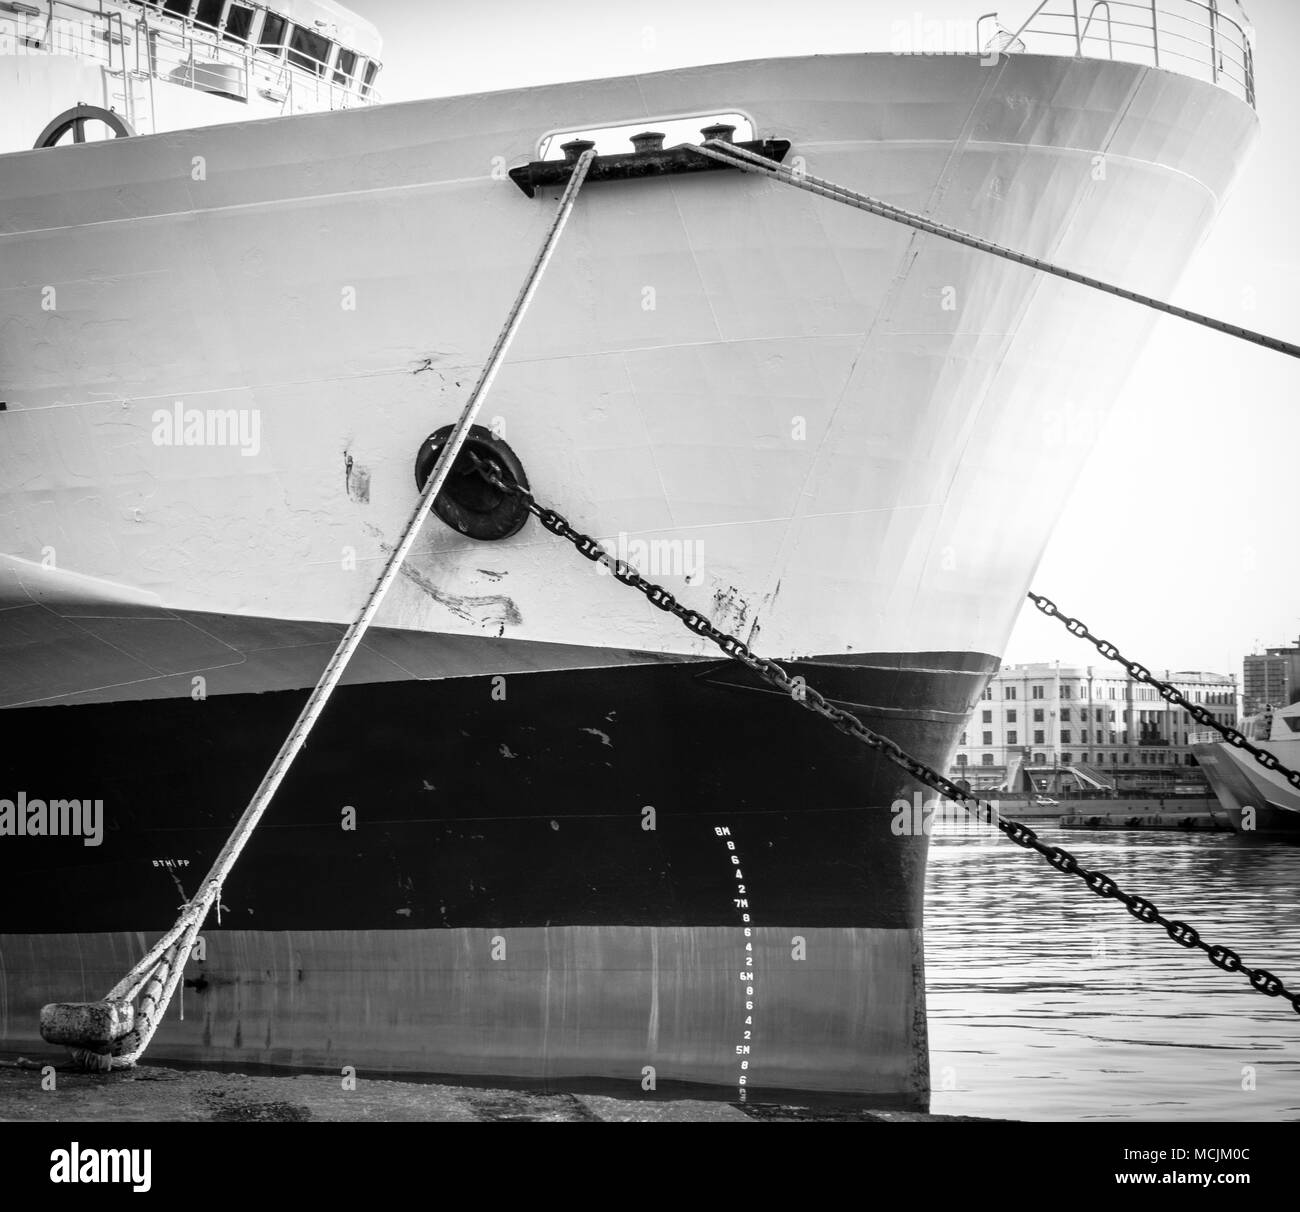 Cruise ship docked at port, Athens, Greece Stock Photo